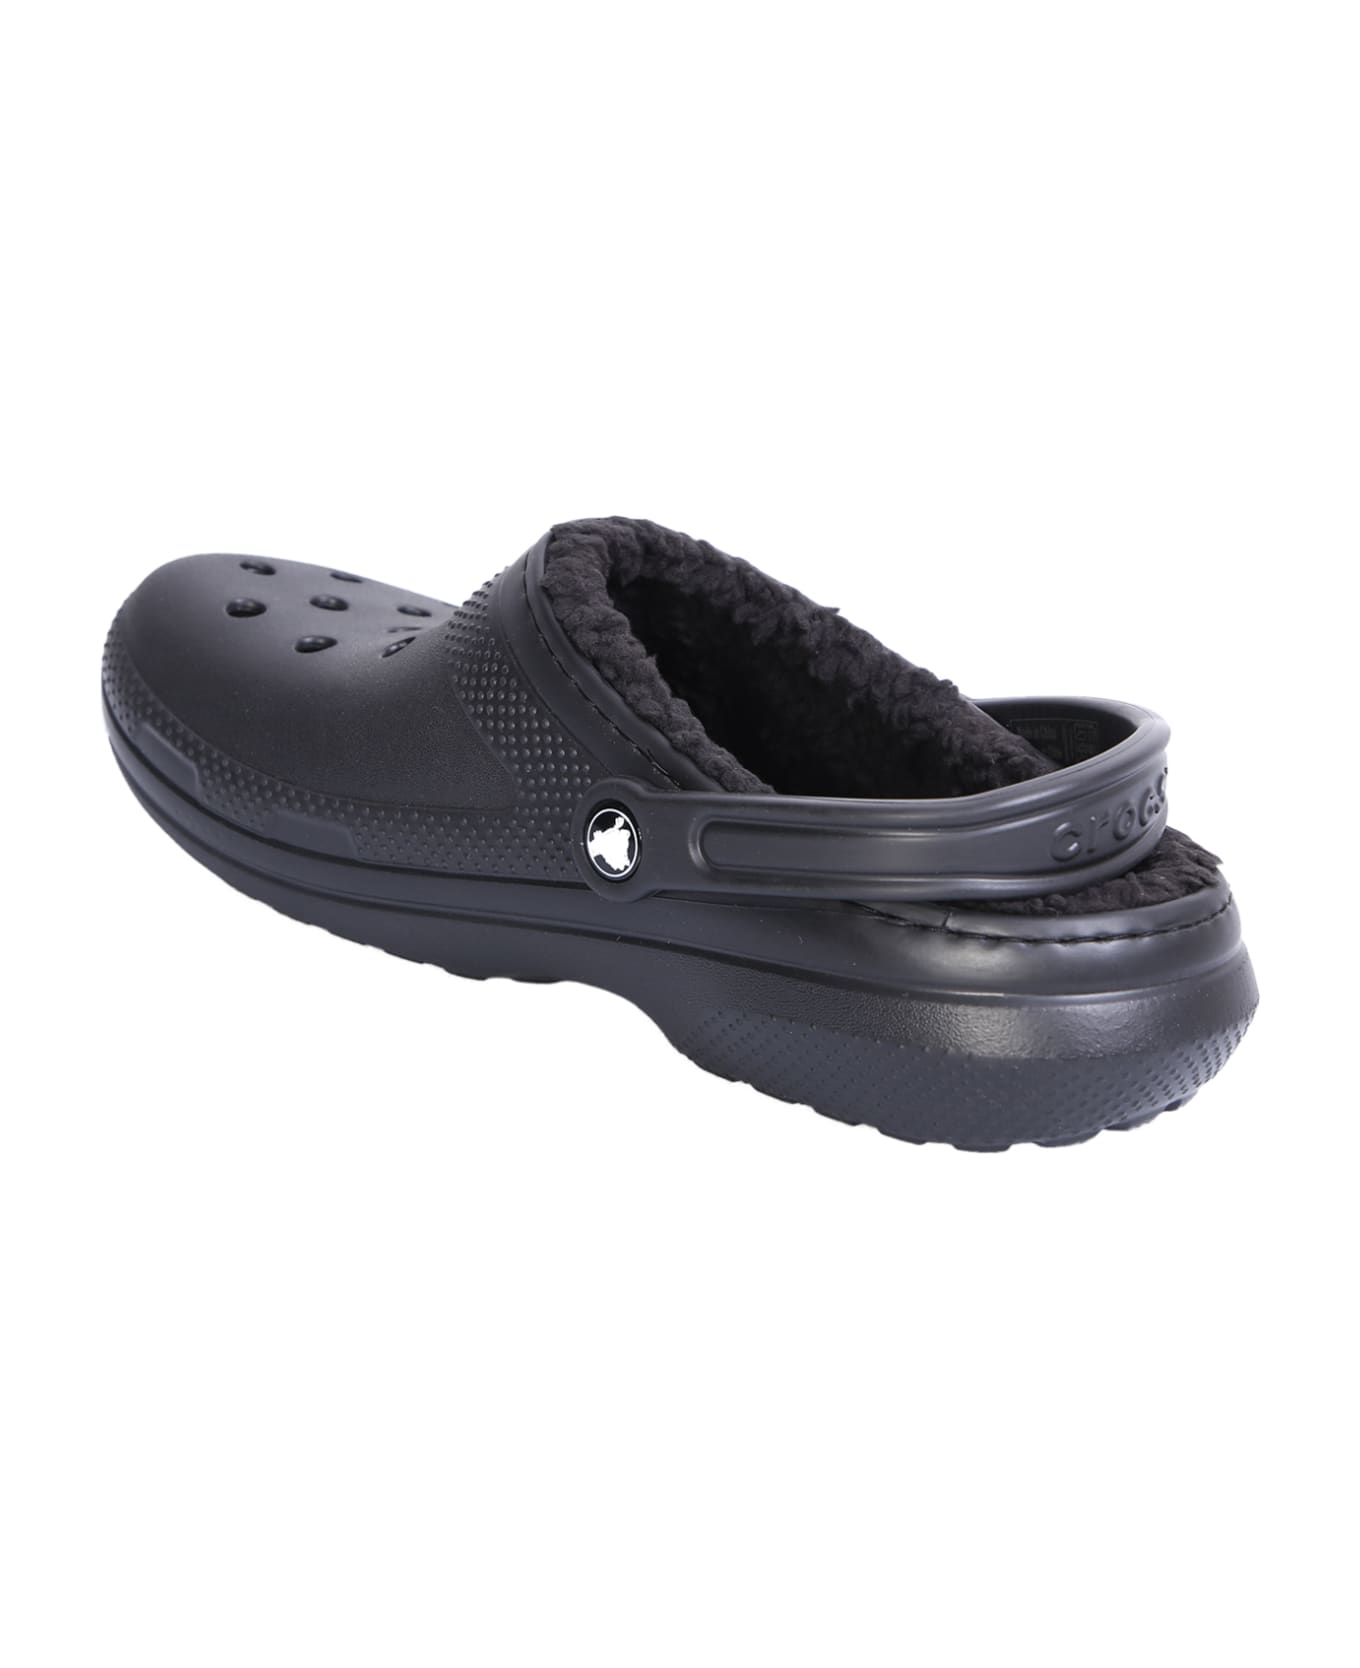 Crocs Classic Lined Clog Sandals In Black - Black